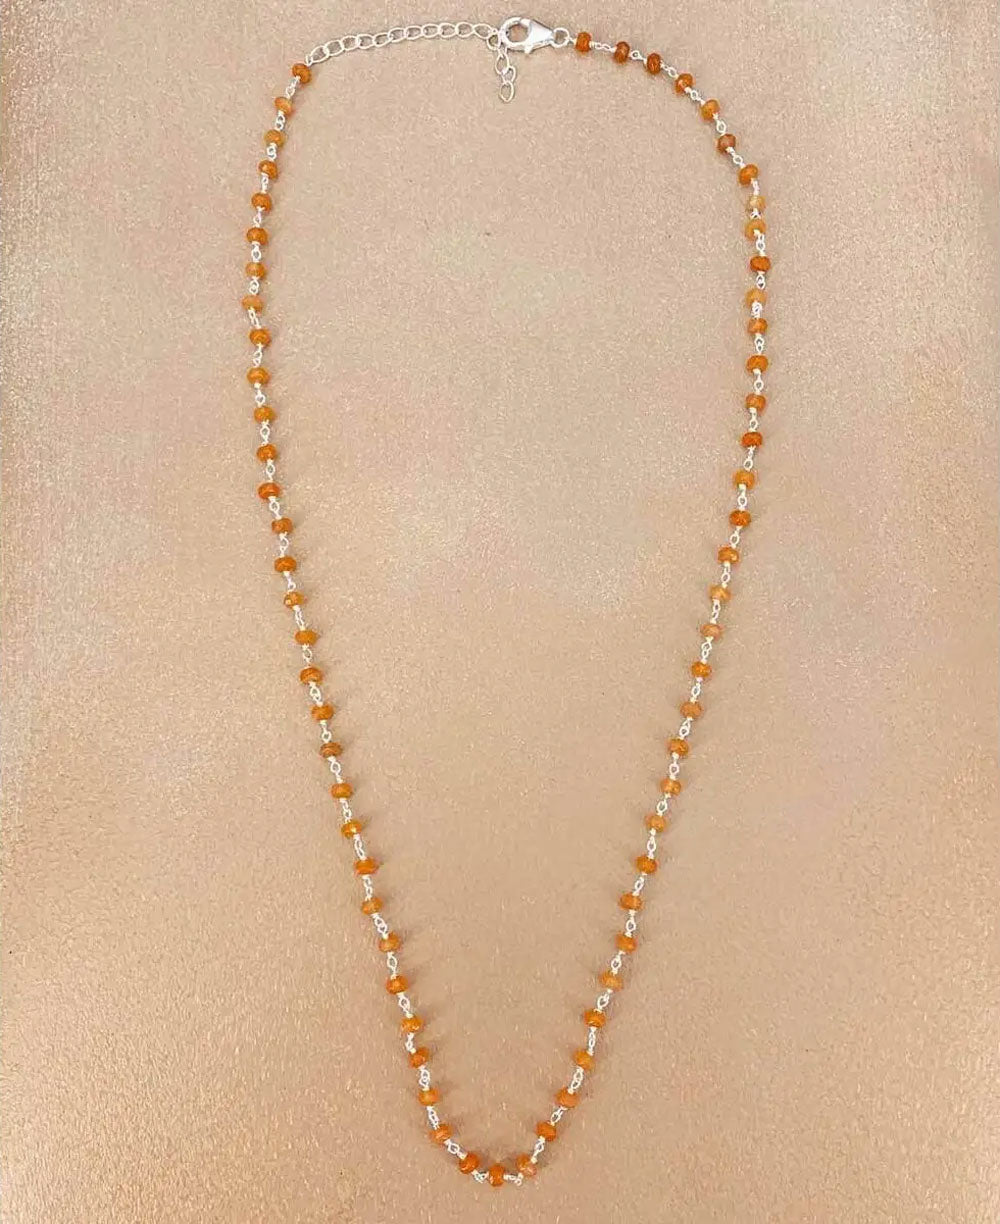 Gemstone Necklace Chain, India